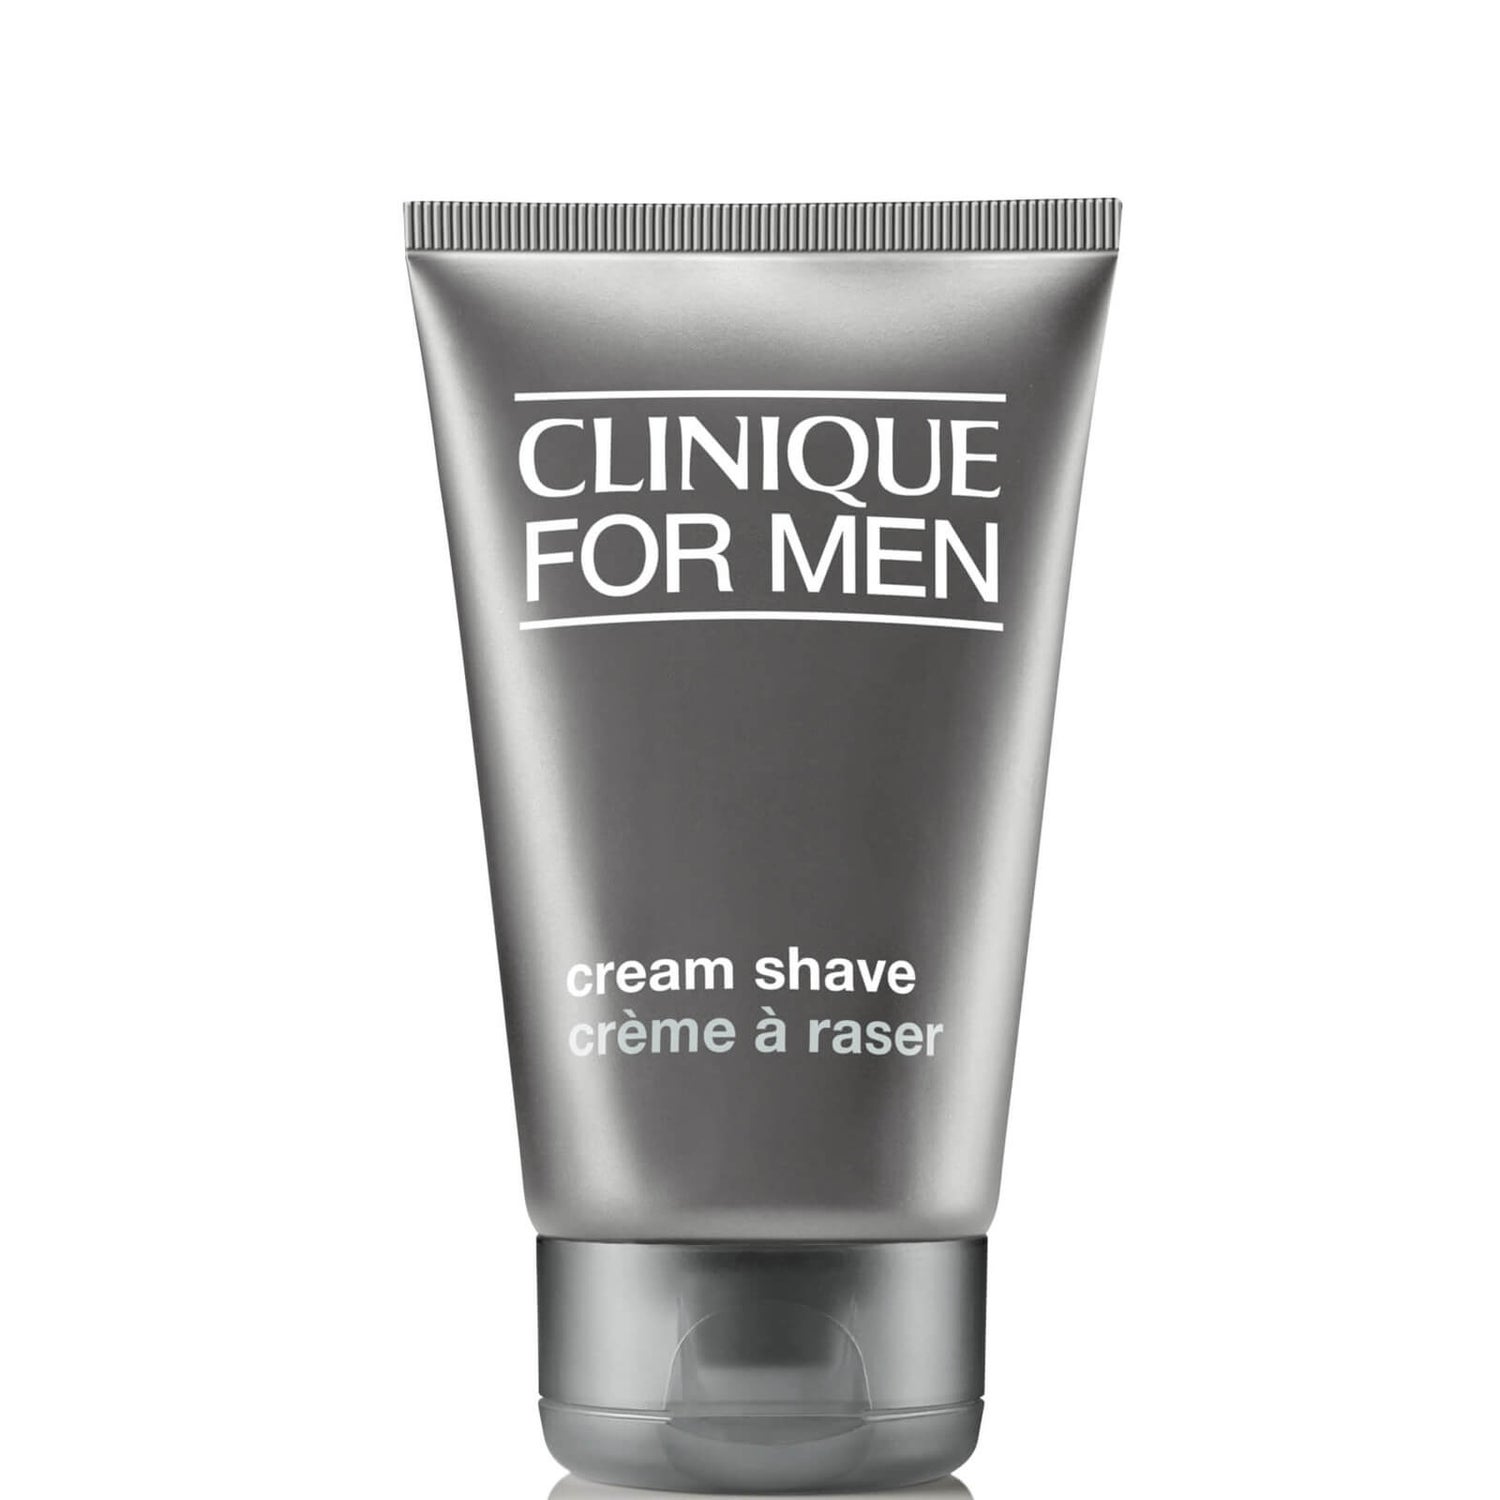 Крем для бритья Clinique for Men Cream Shave, 125 мл